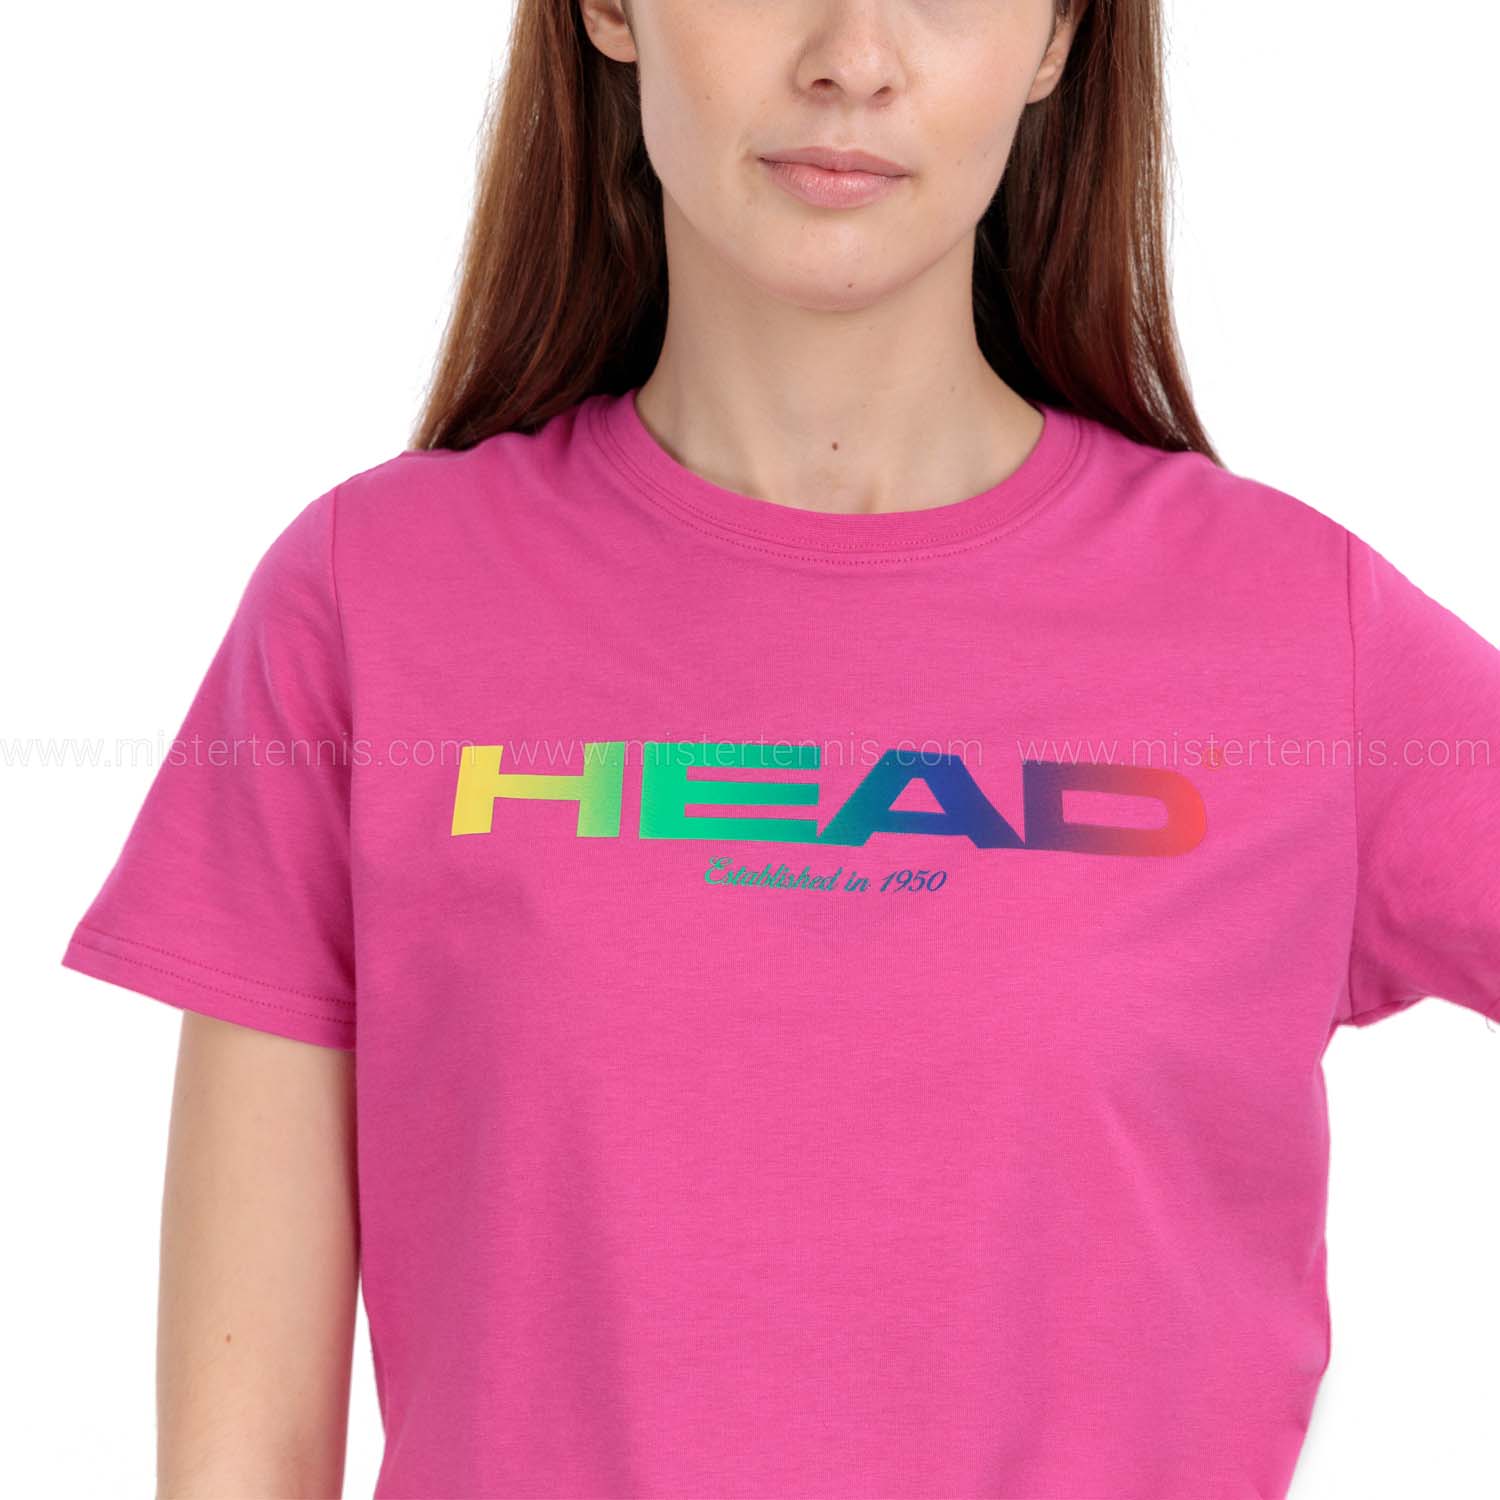 Head Rainbow T-Shirt - Vivid Pink